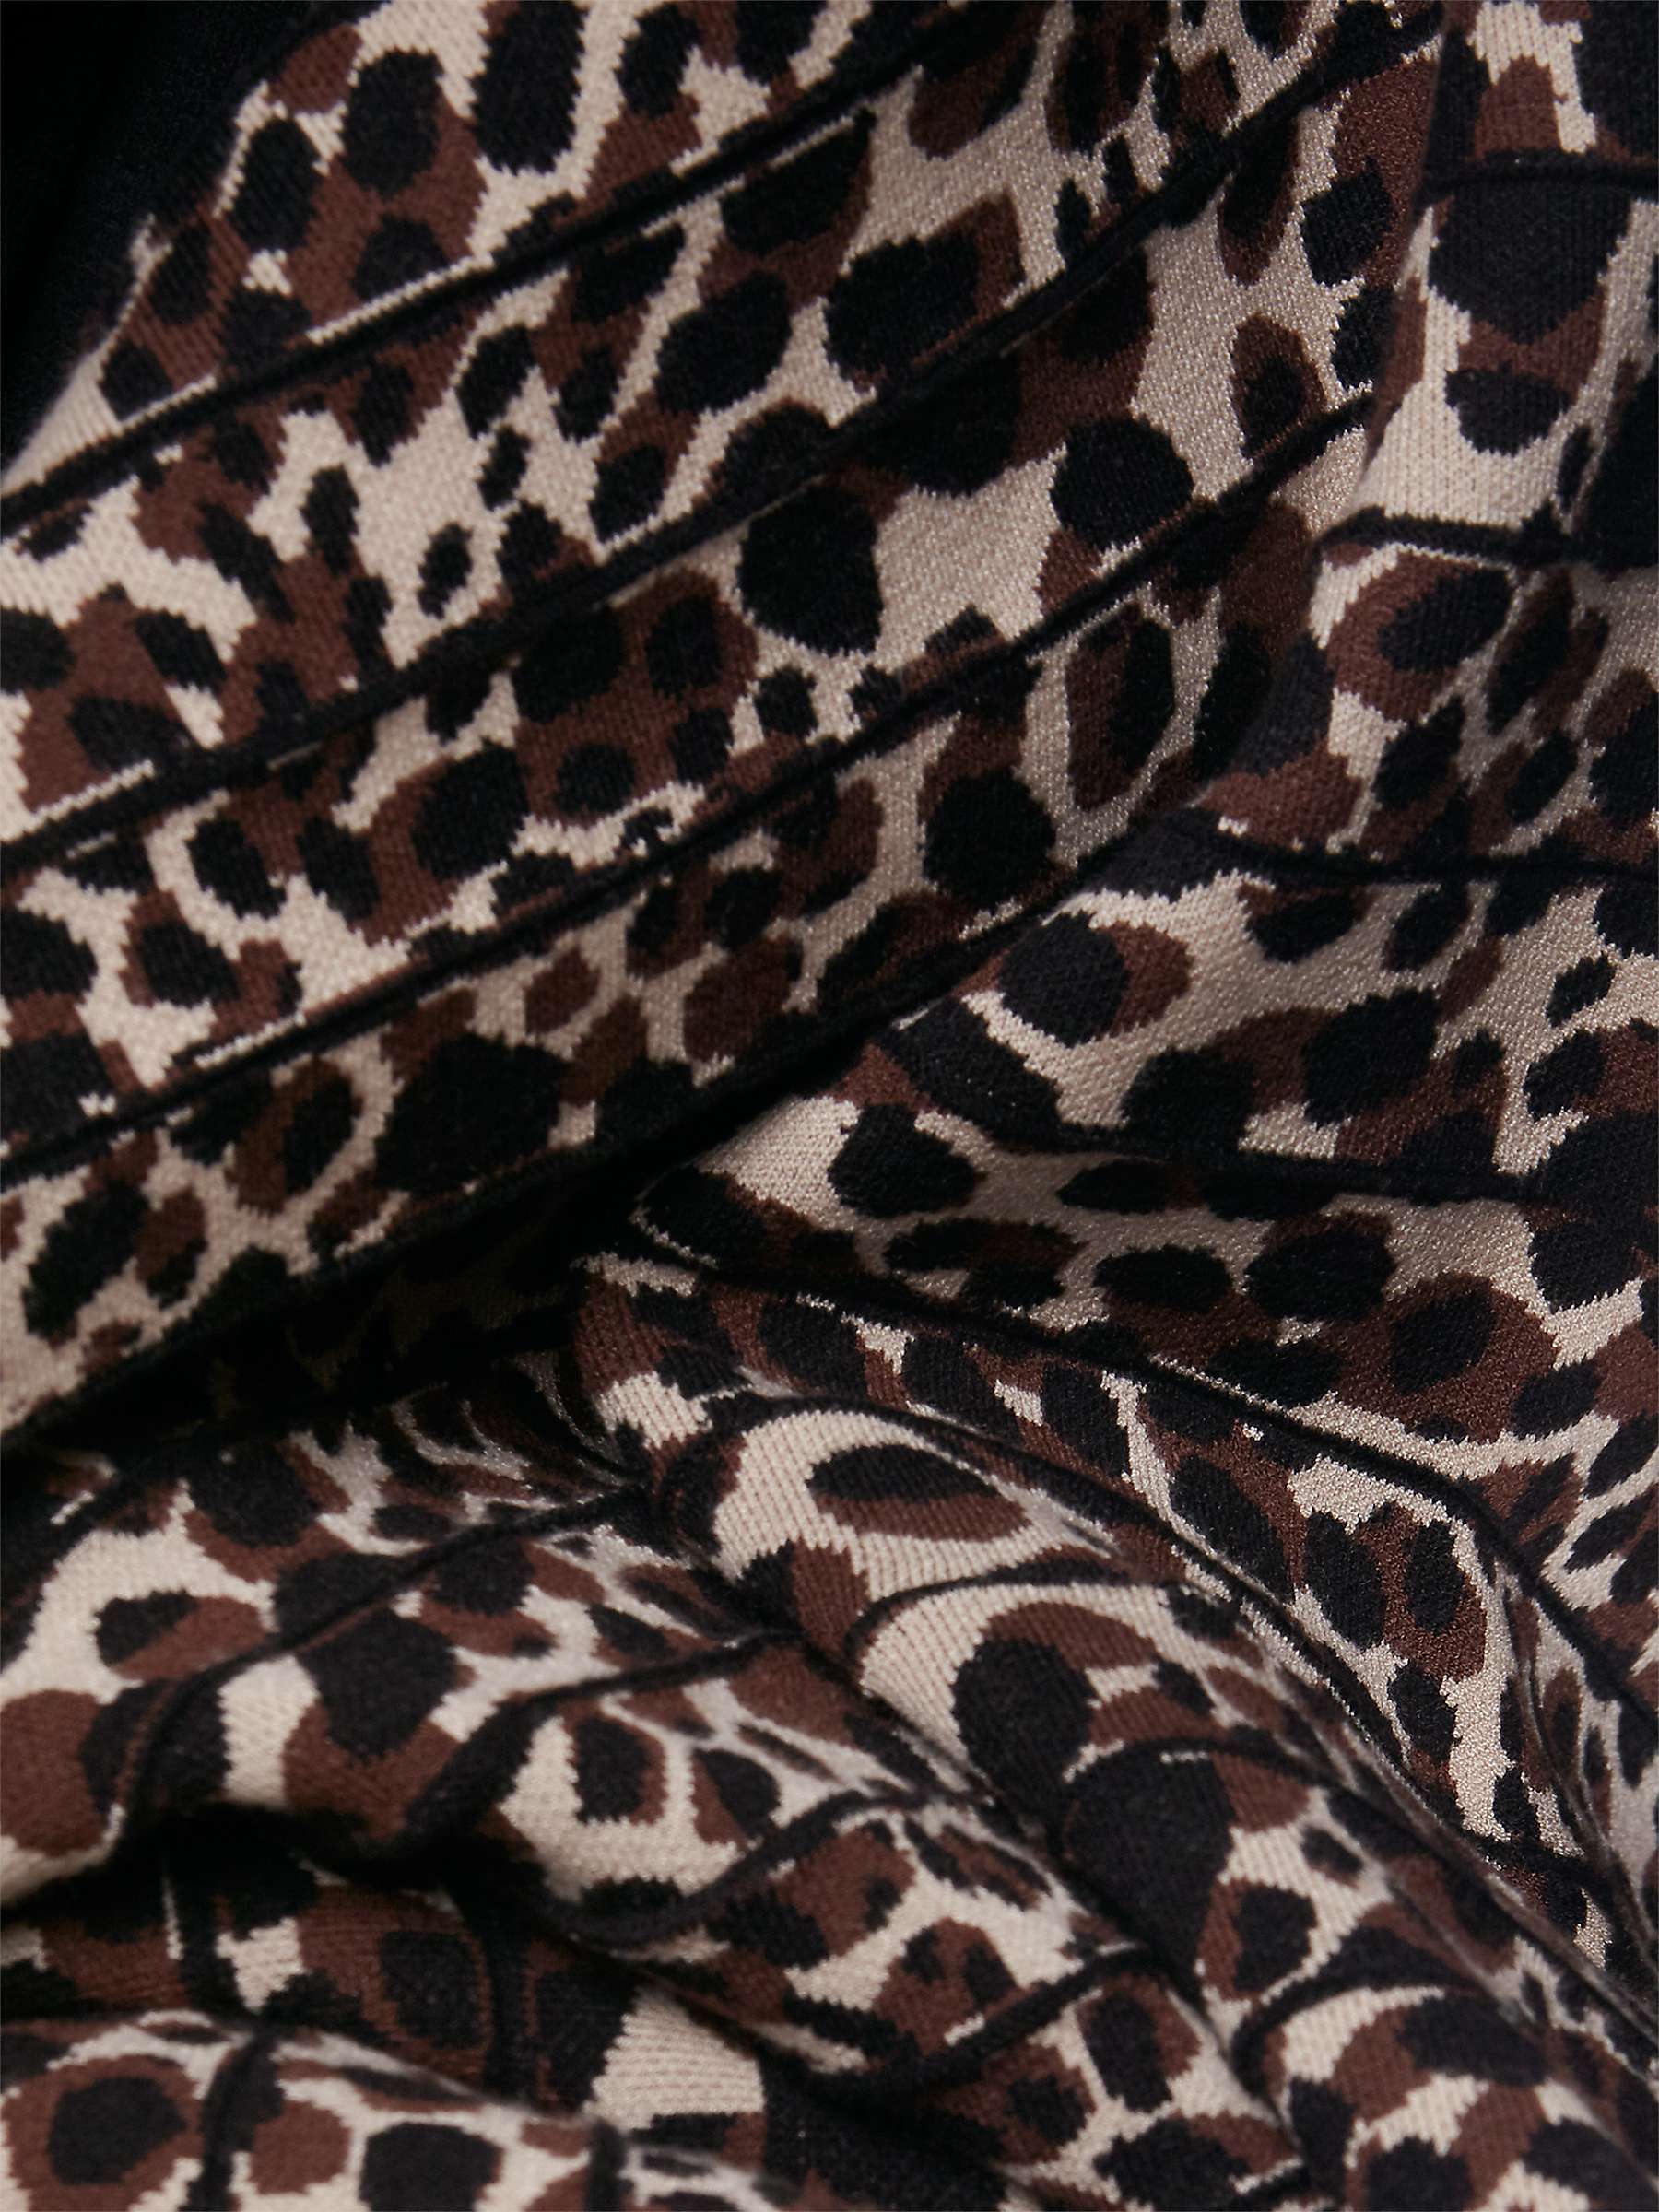 Buy Hobbs Harlie Leopard Midi Dress Online at johnlewis.com